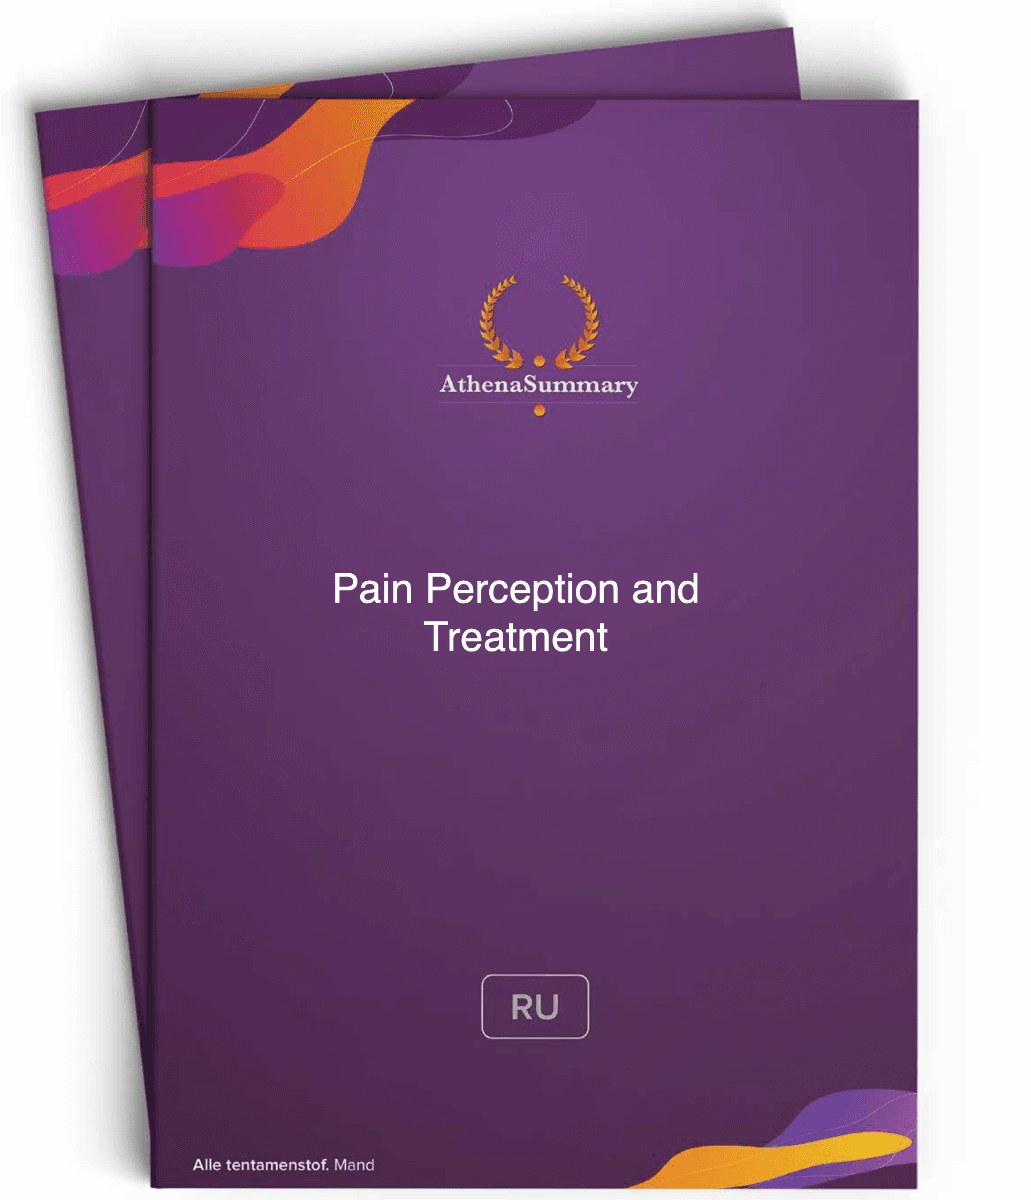 Literature Summary - Pain Perception and Treatment